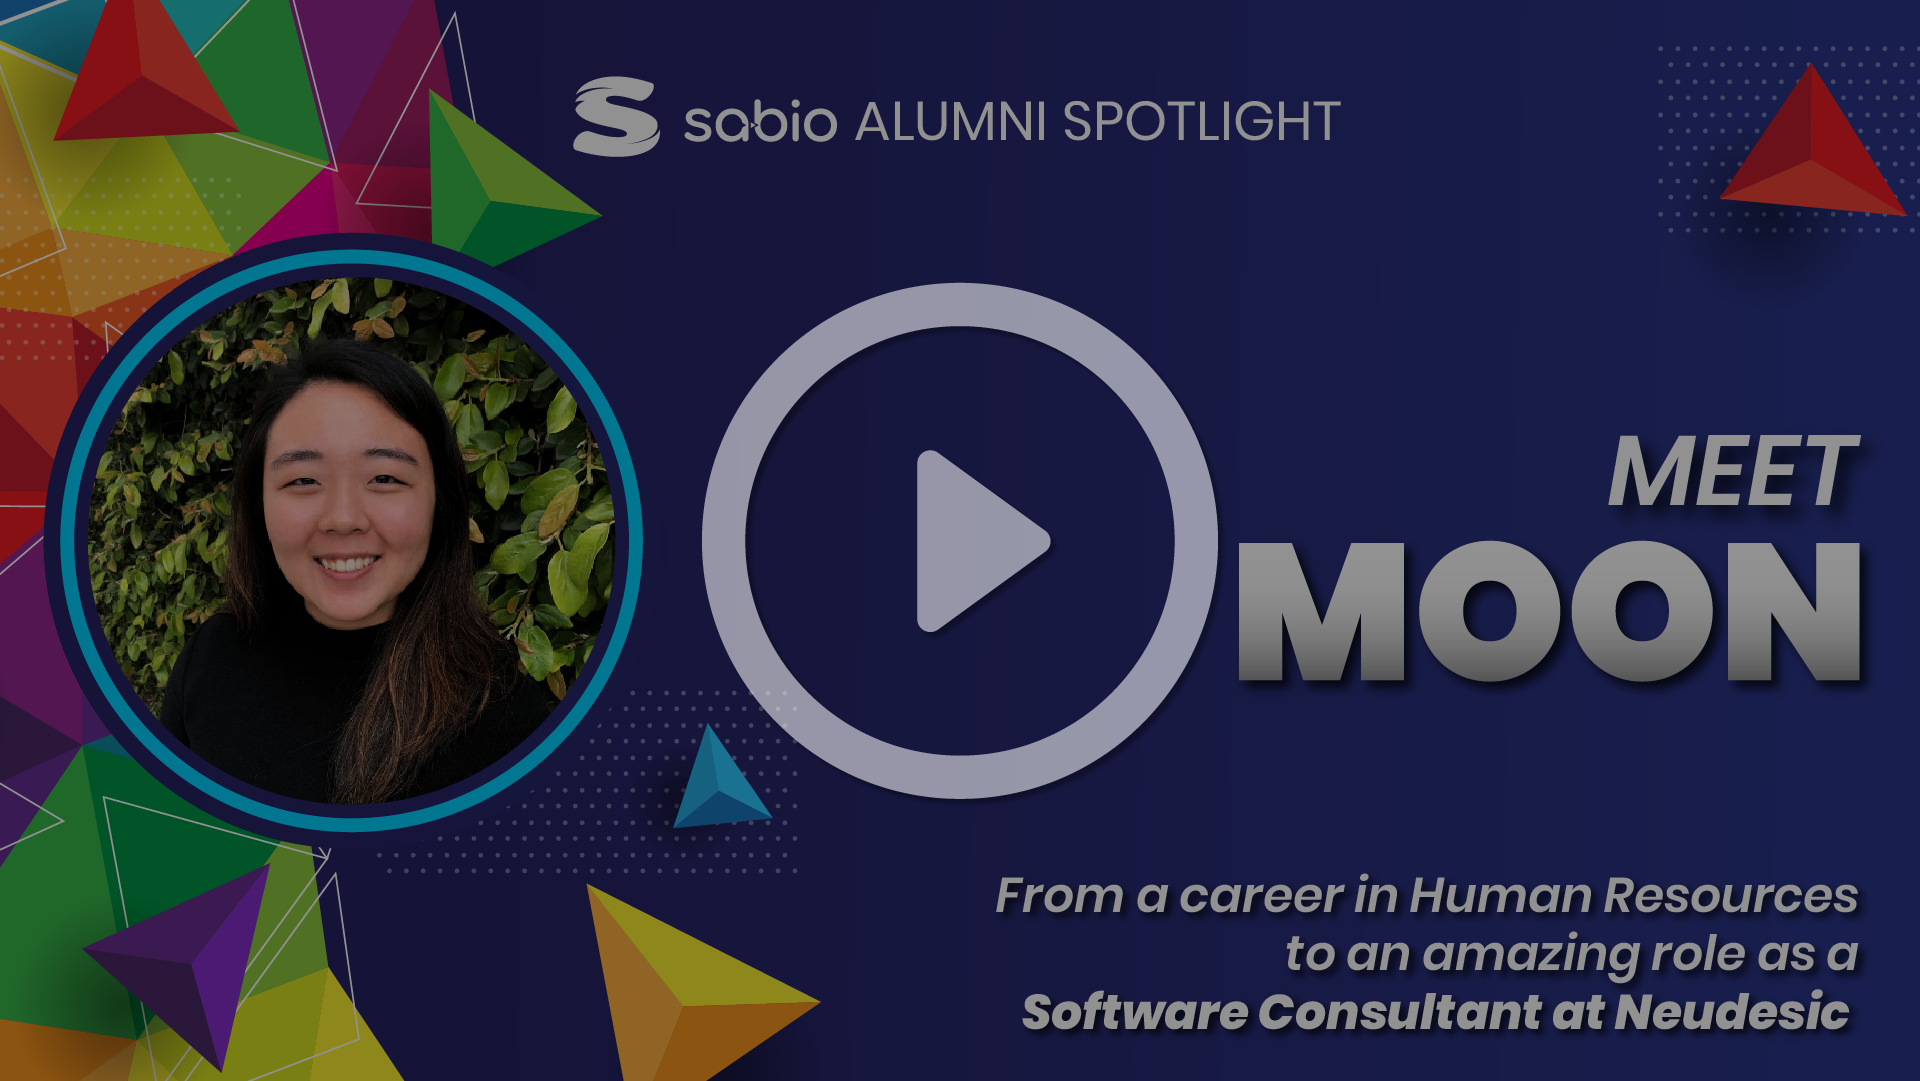 Sabio Alumni Spotlight: Moon. Play symbol overlaid to the image.